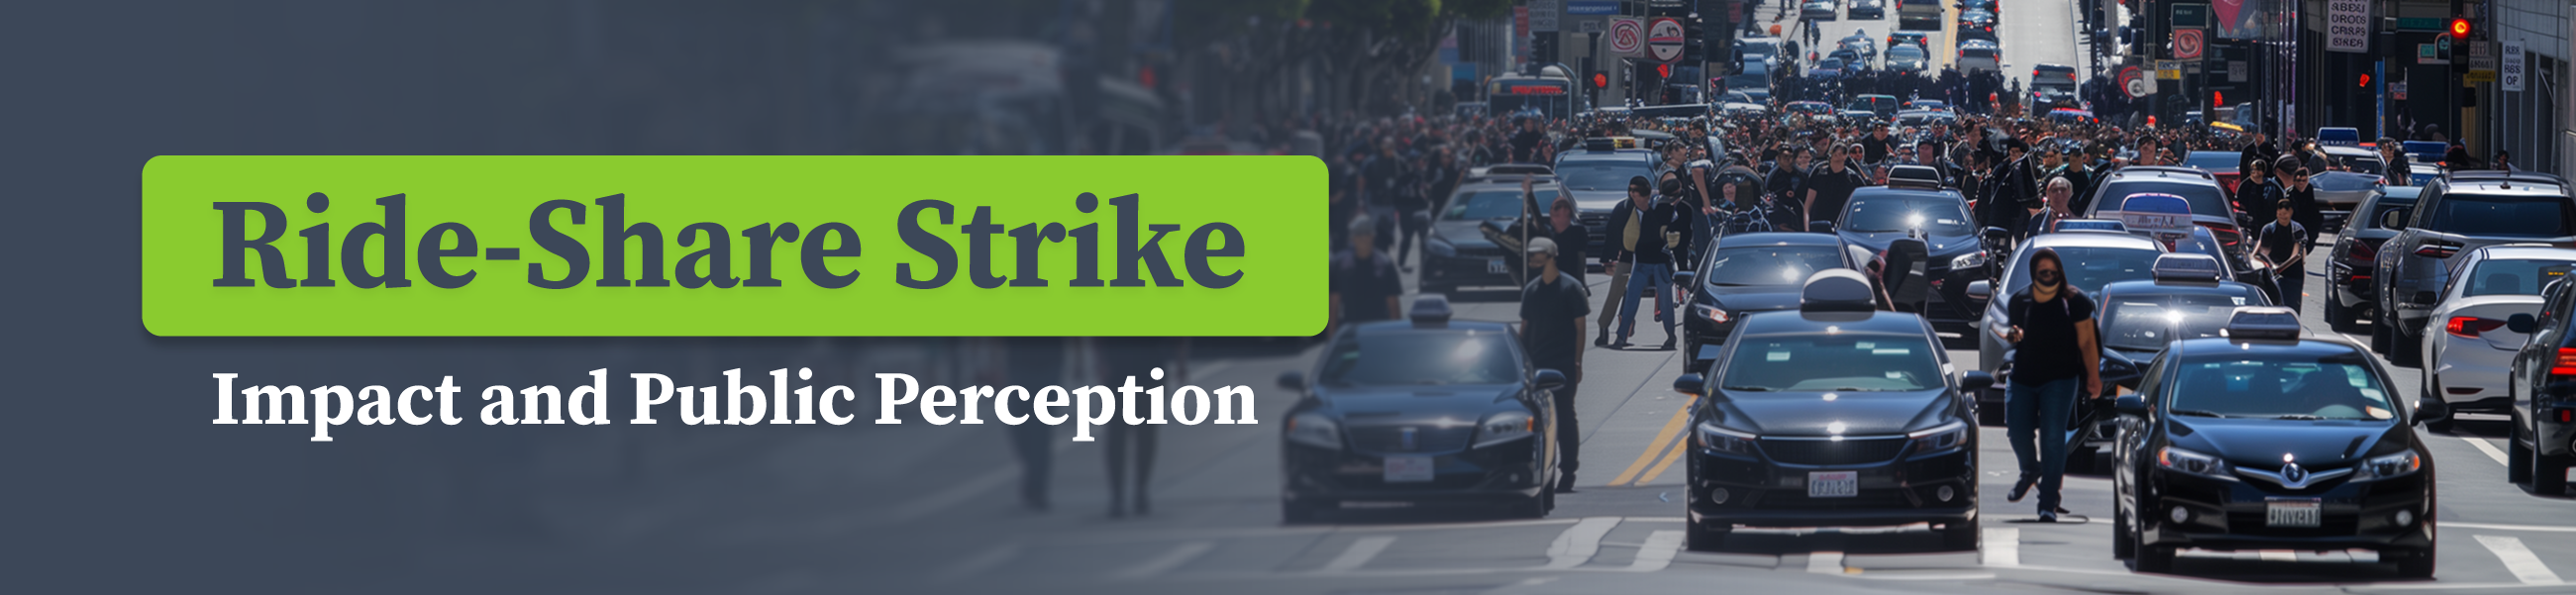 Ride-sharing strike header